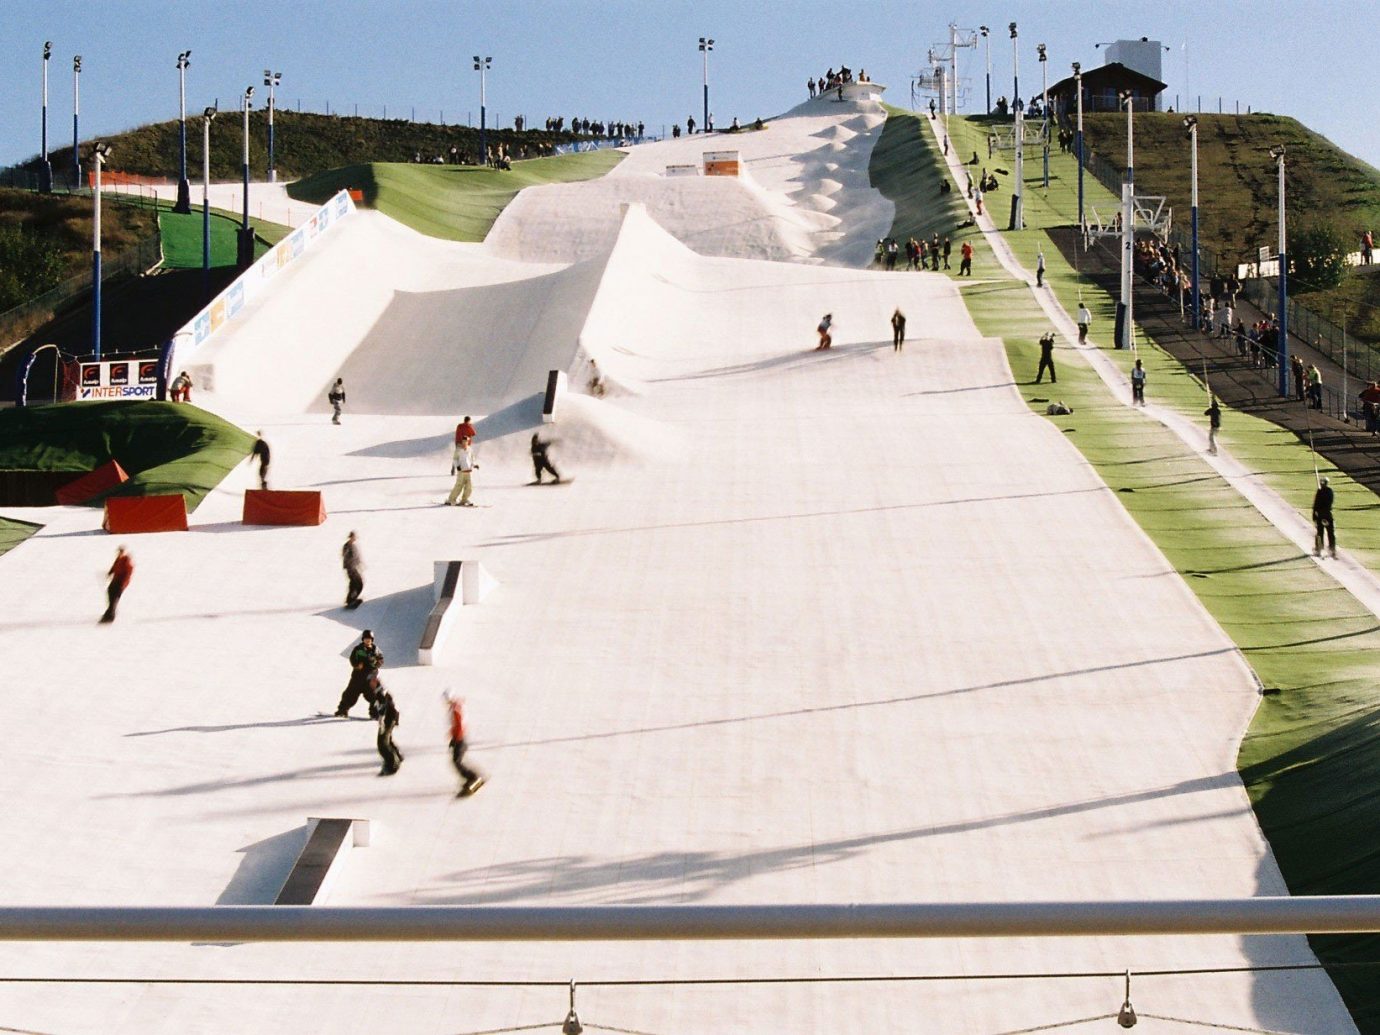 Trip Ideas sky outdoor outdoor recreation skateboarding roof